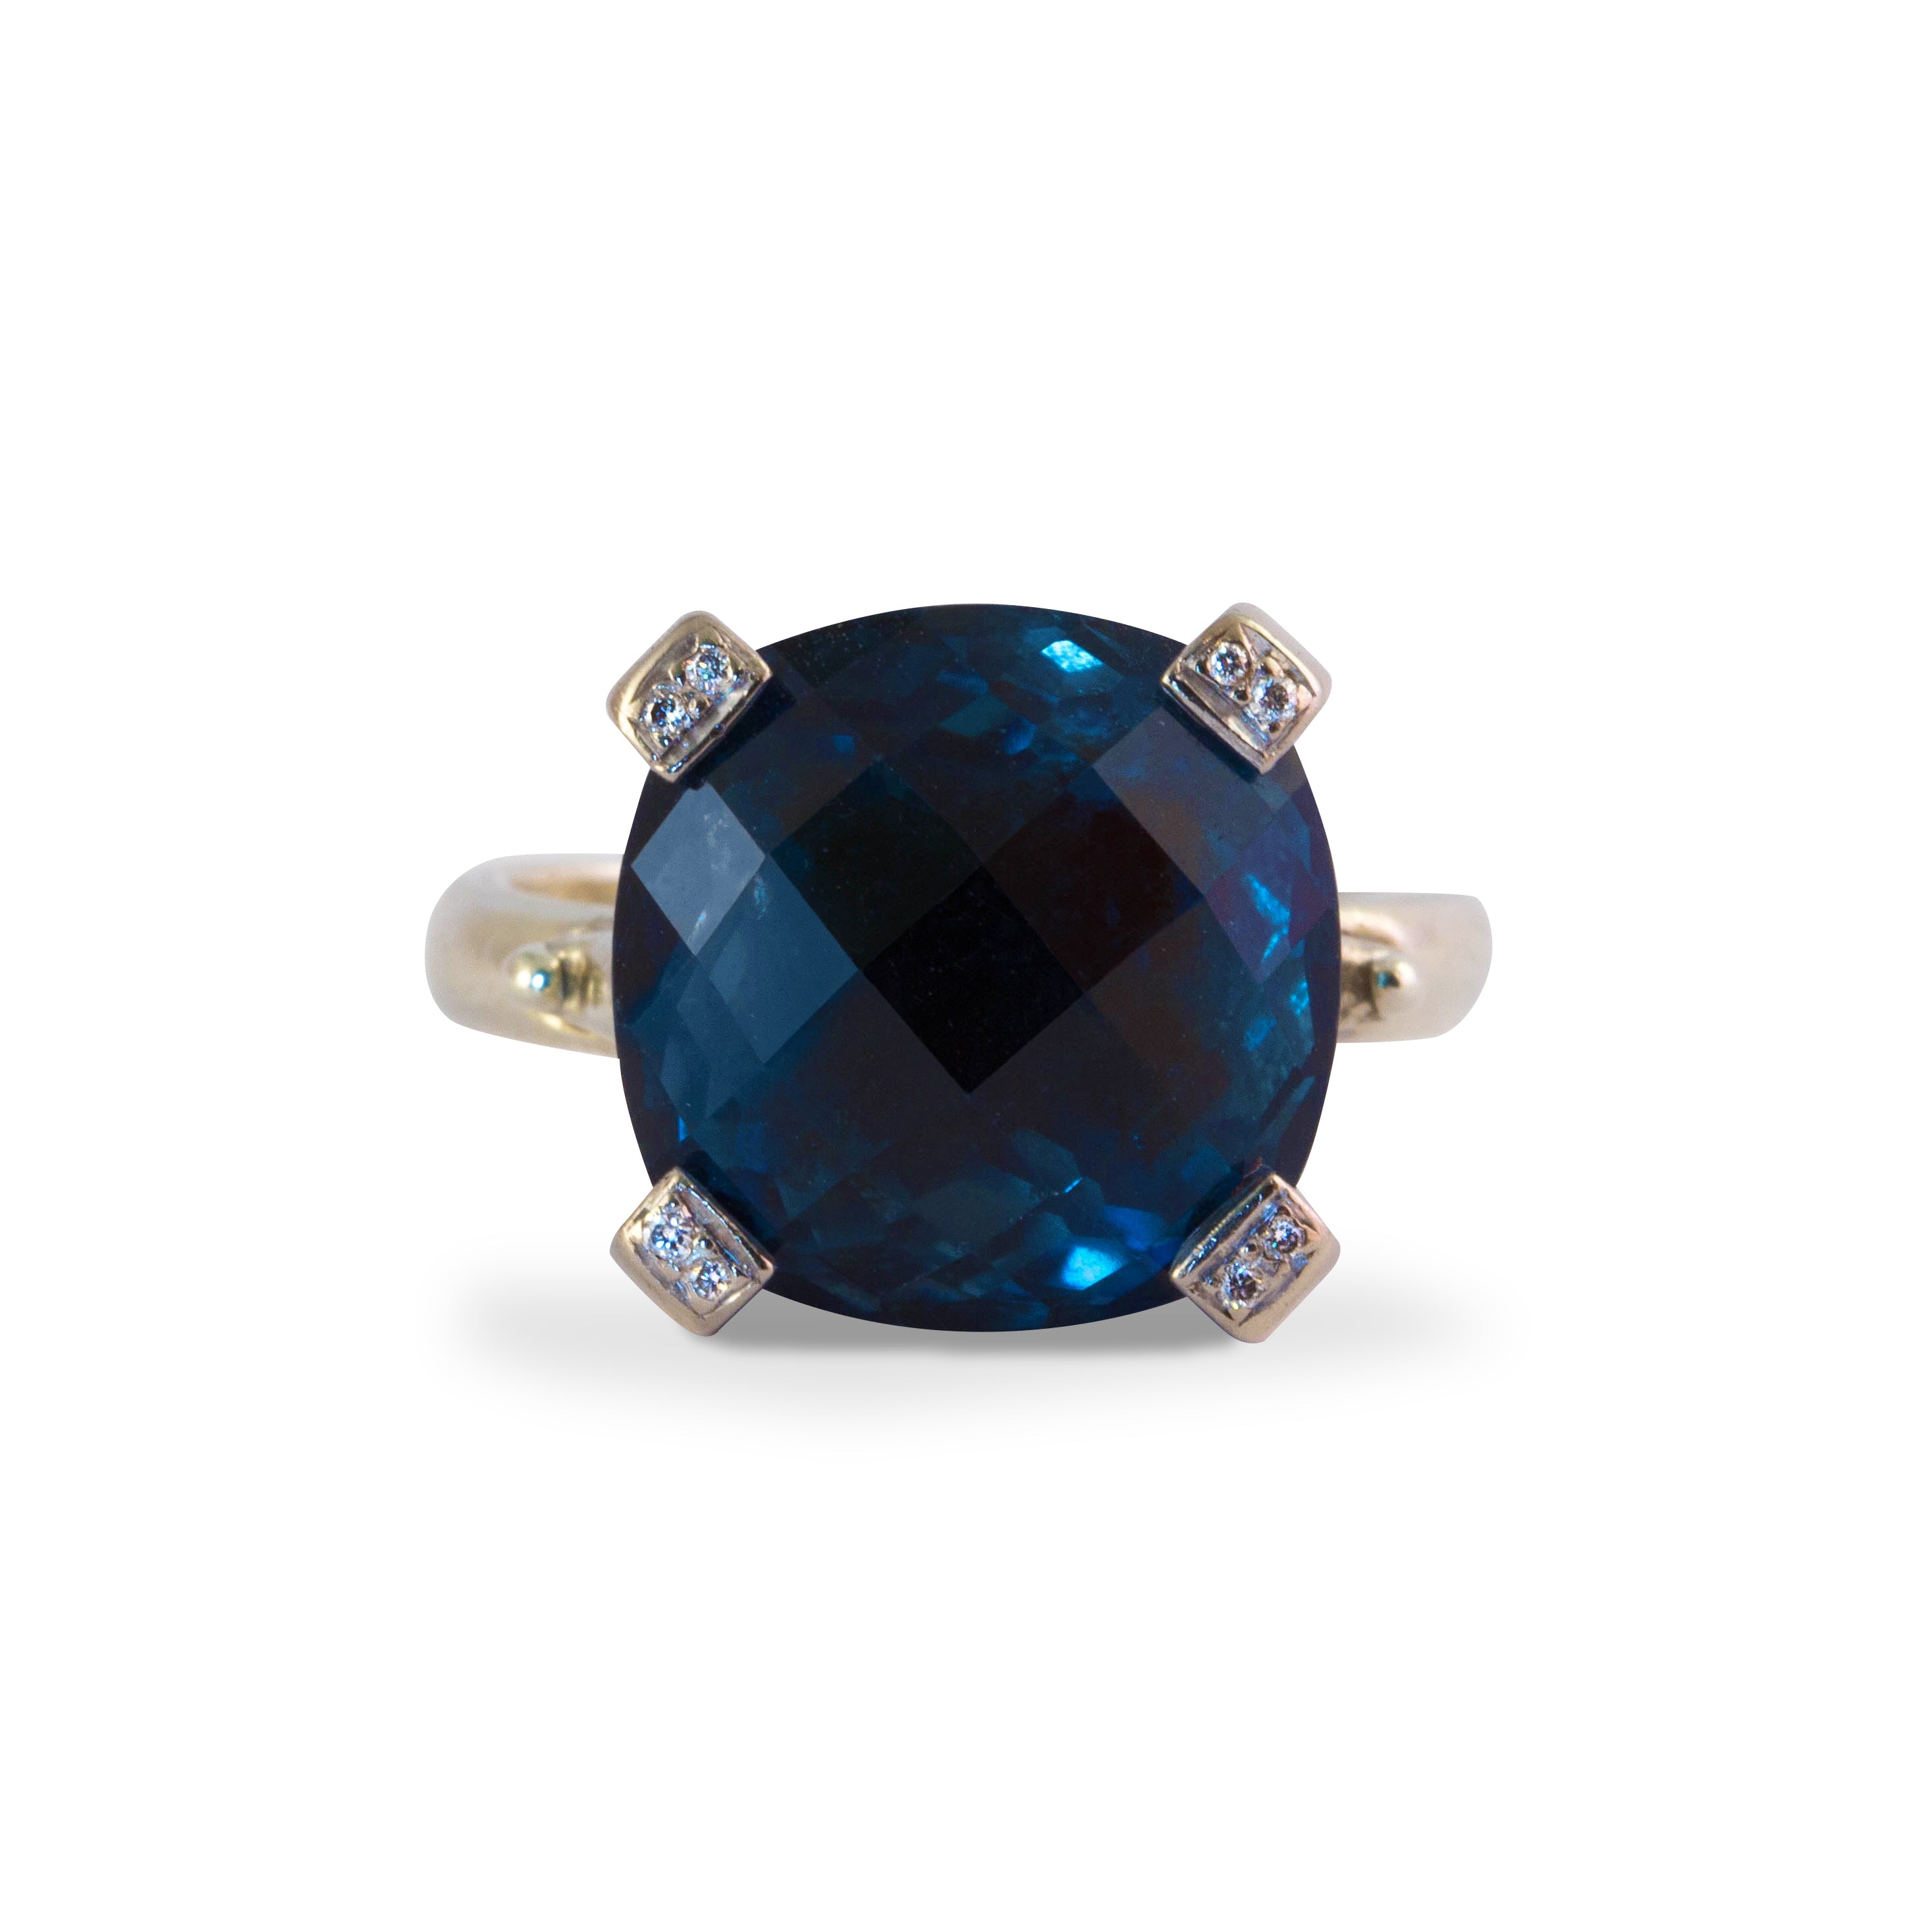 Cushion Cut London Blue Topaz Ring with Diamond Set Claws